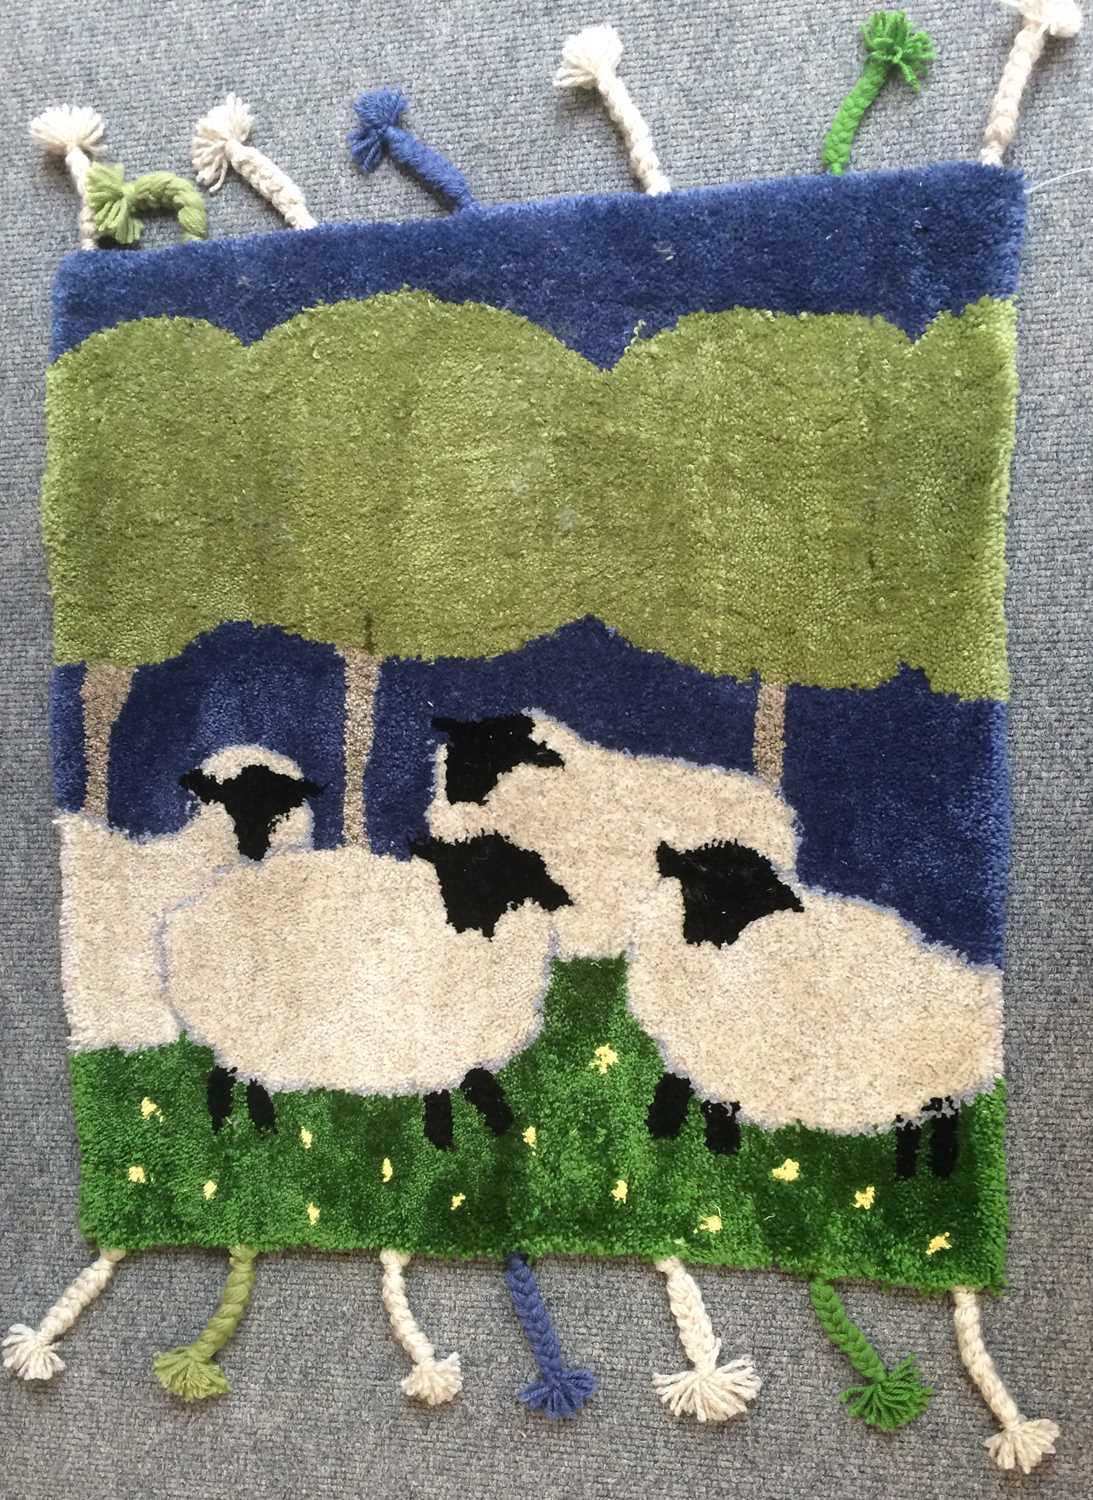 Handmade Jane Dobinson "Bramble & Bumble" Rug, the field depicting sheep grazing in a meadow beneath - Image 8 of 8